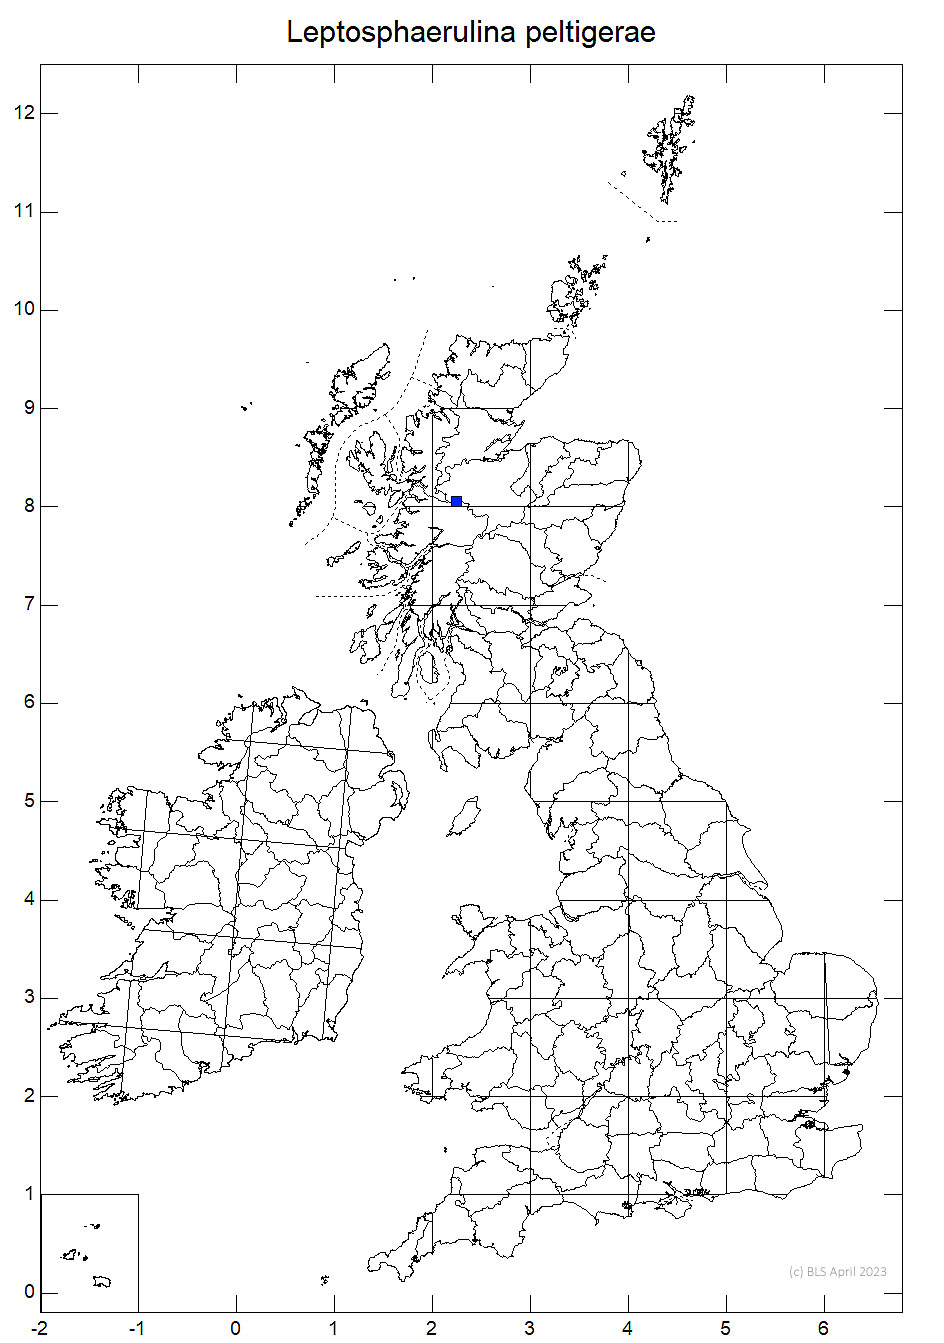 Leptosphaerulina peltigerae 10km sq distribution map